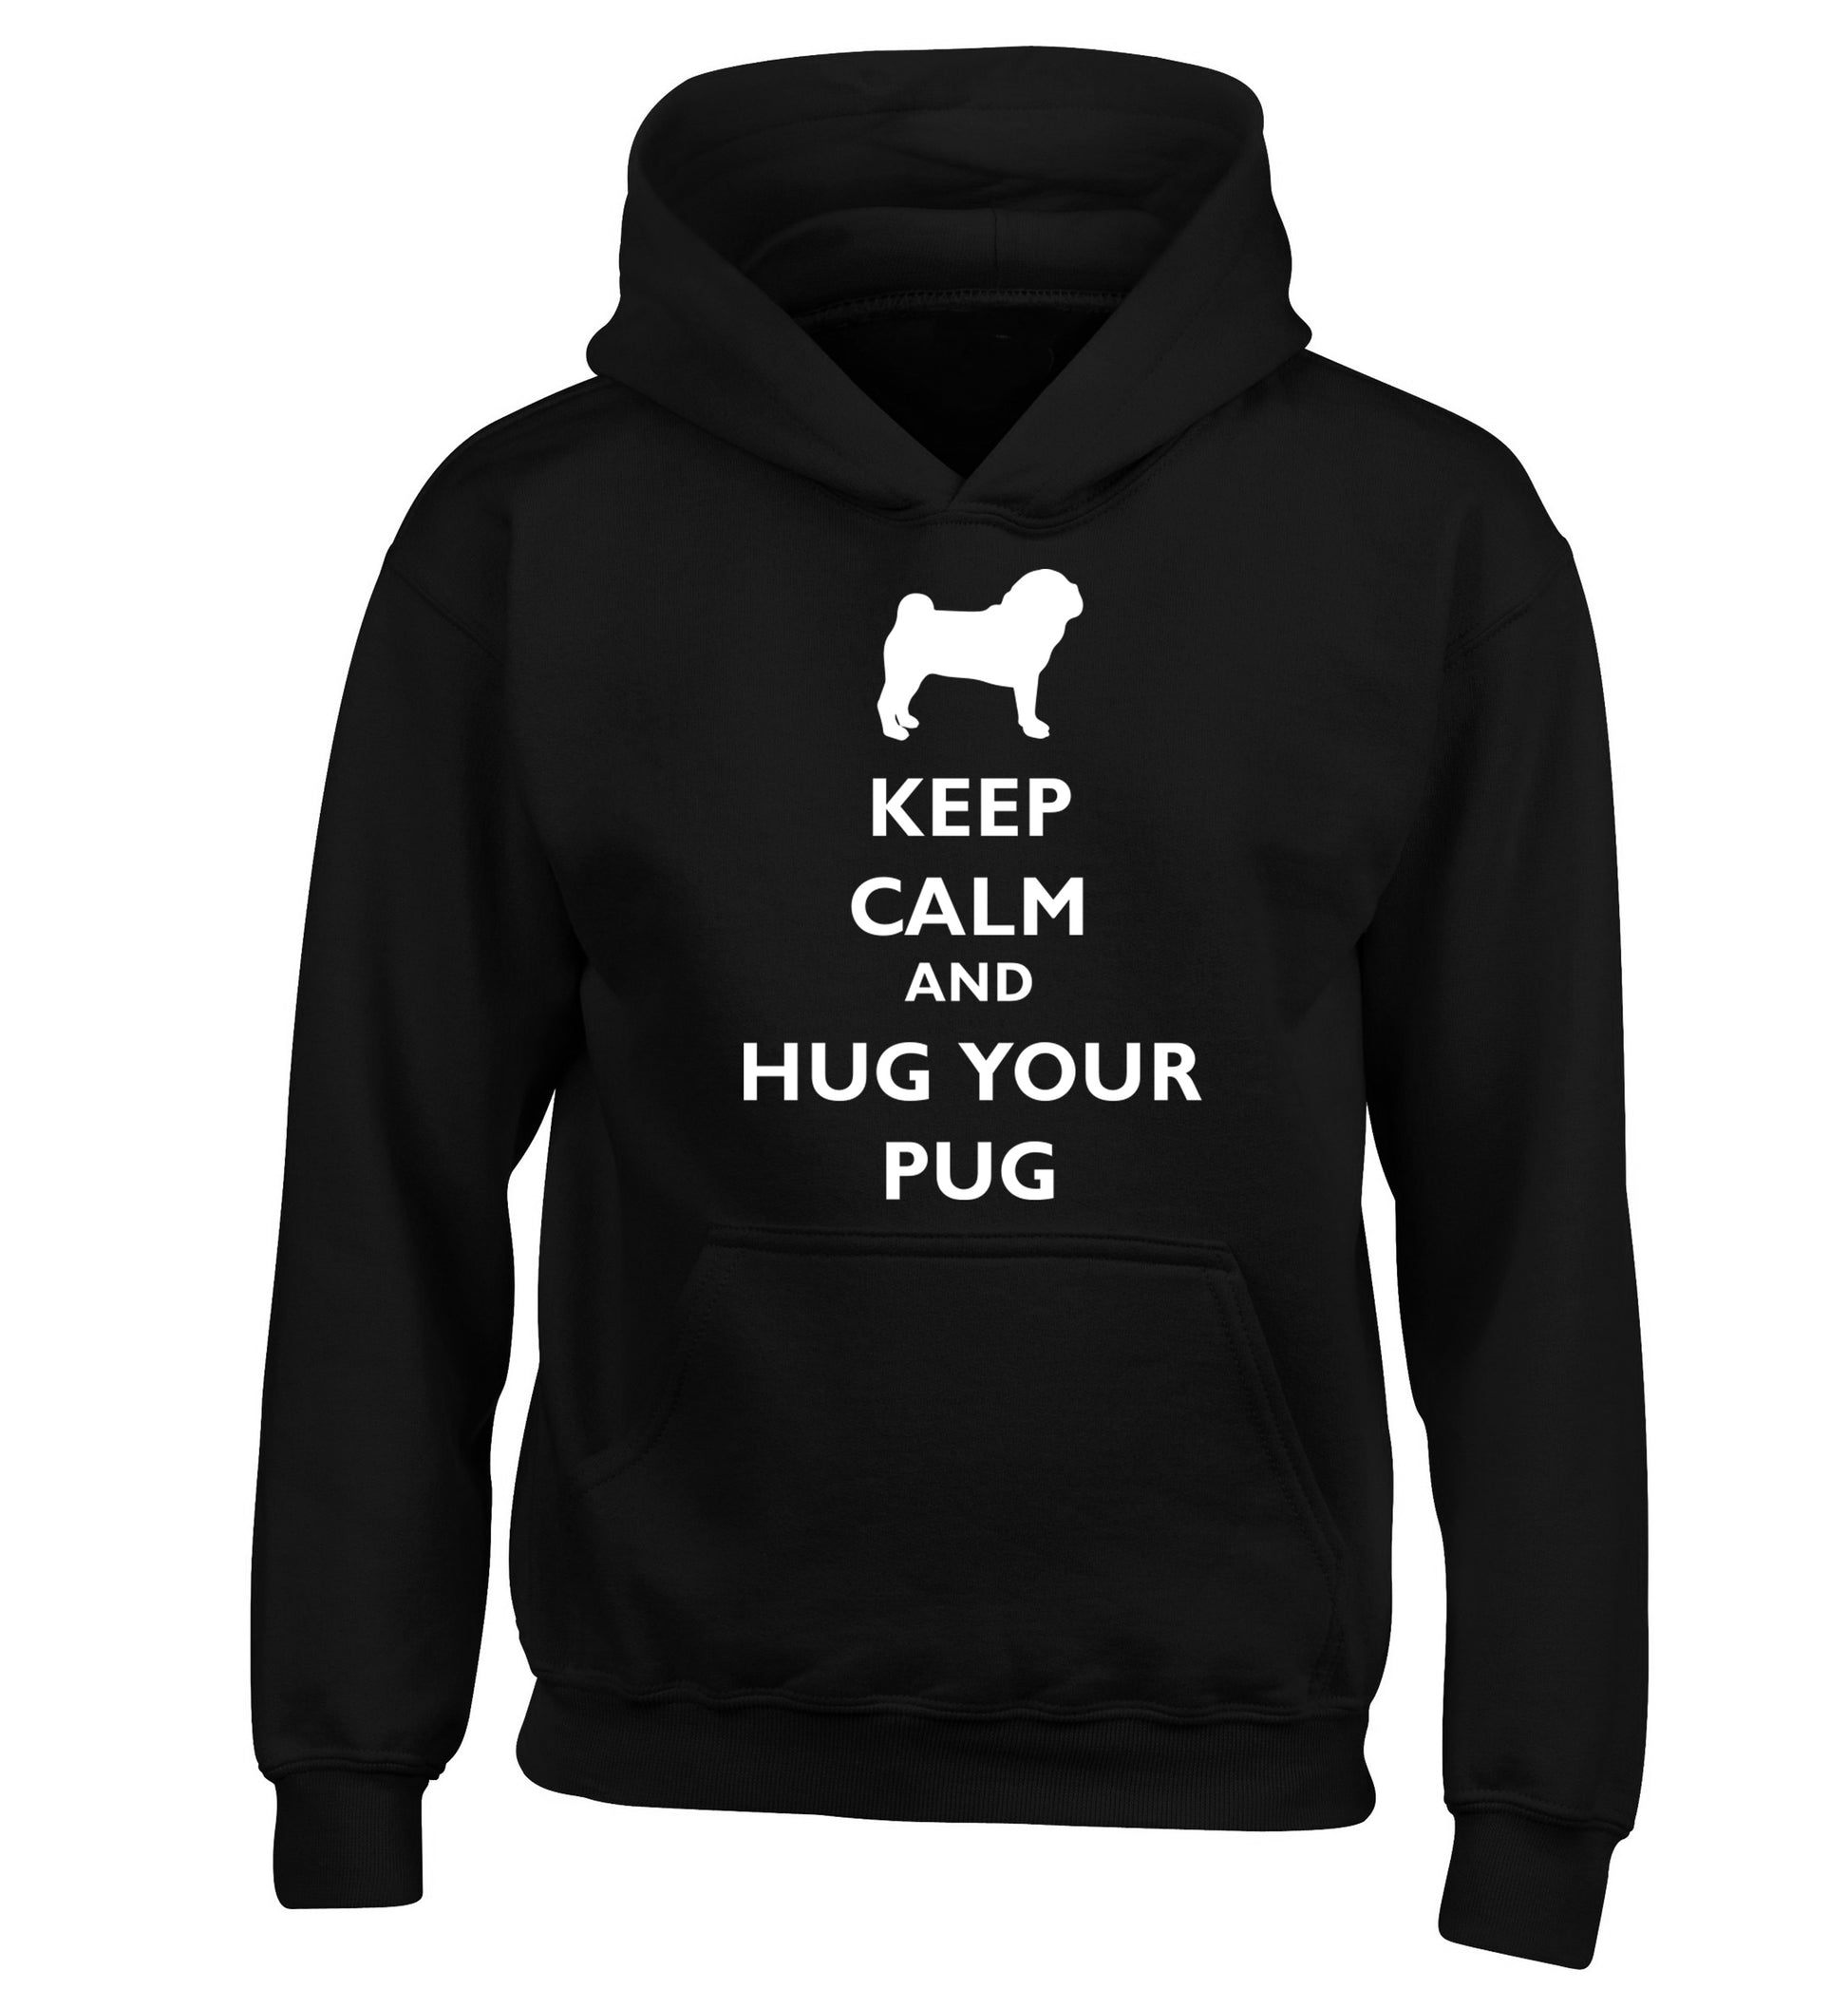 Keep calm and hug your pug children's black hoodie 12-13 Years